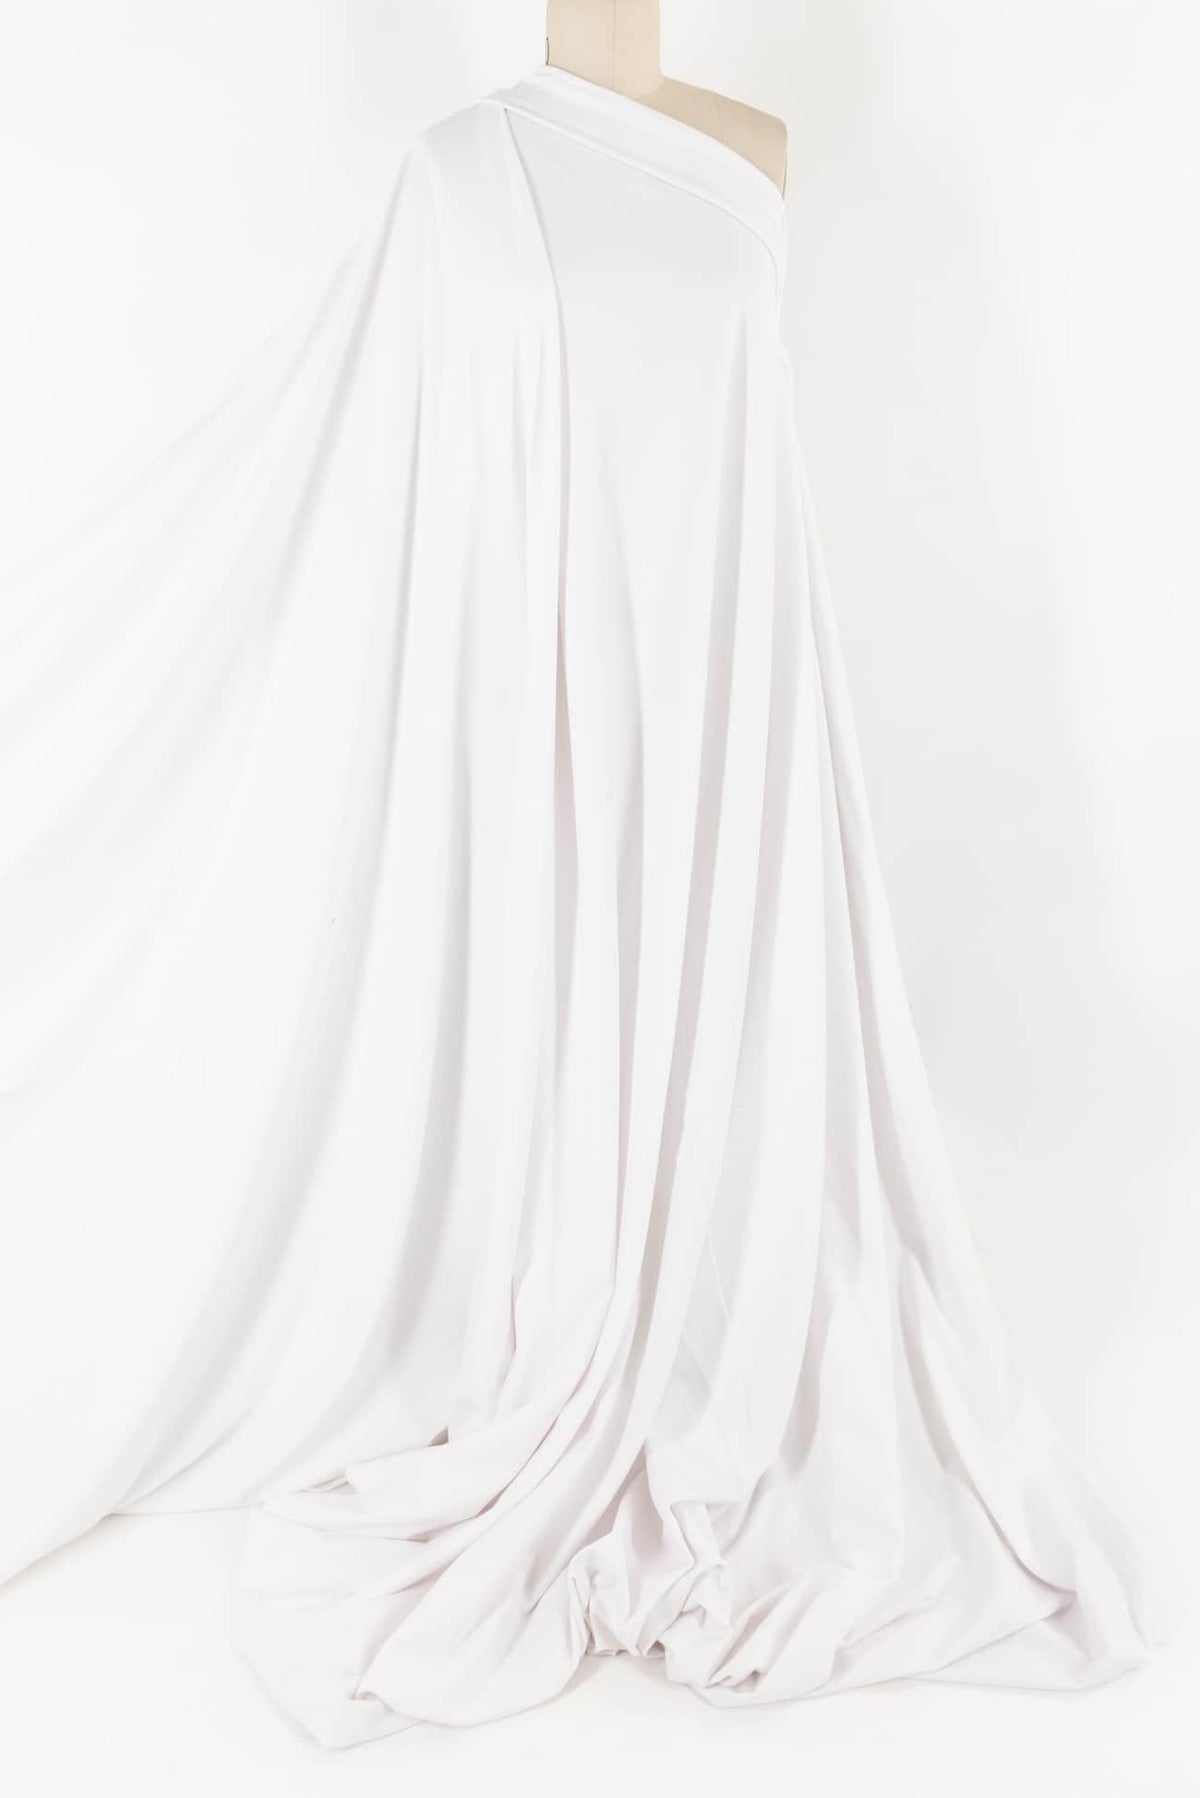 White Lightening Cotton French Terry Knit - Marcy Tilton Fabrics